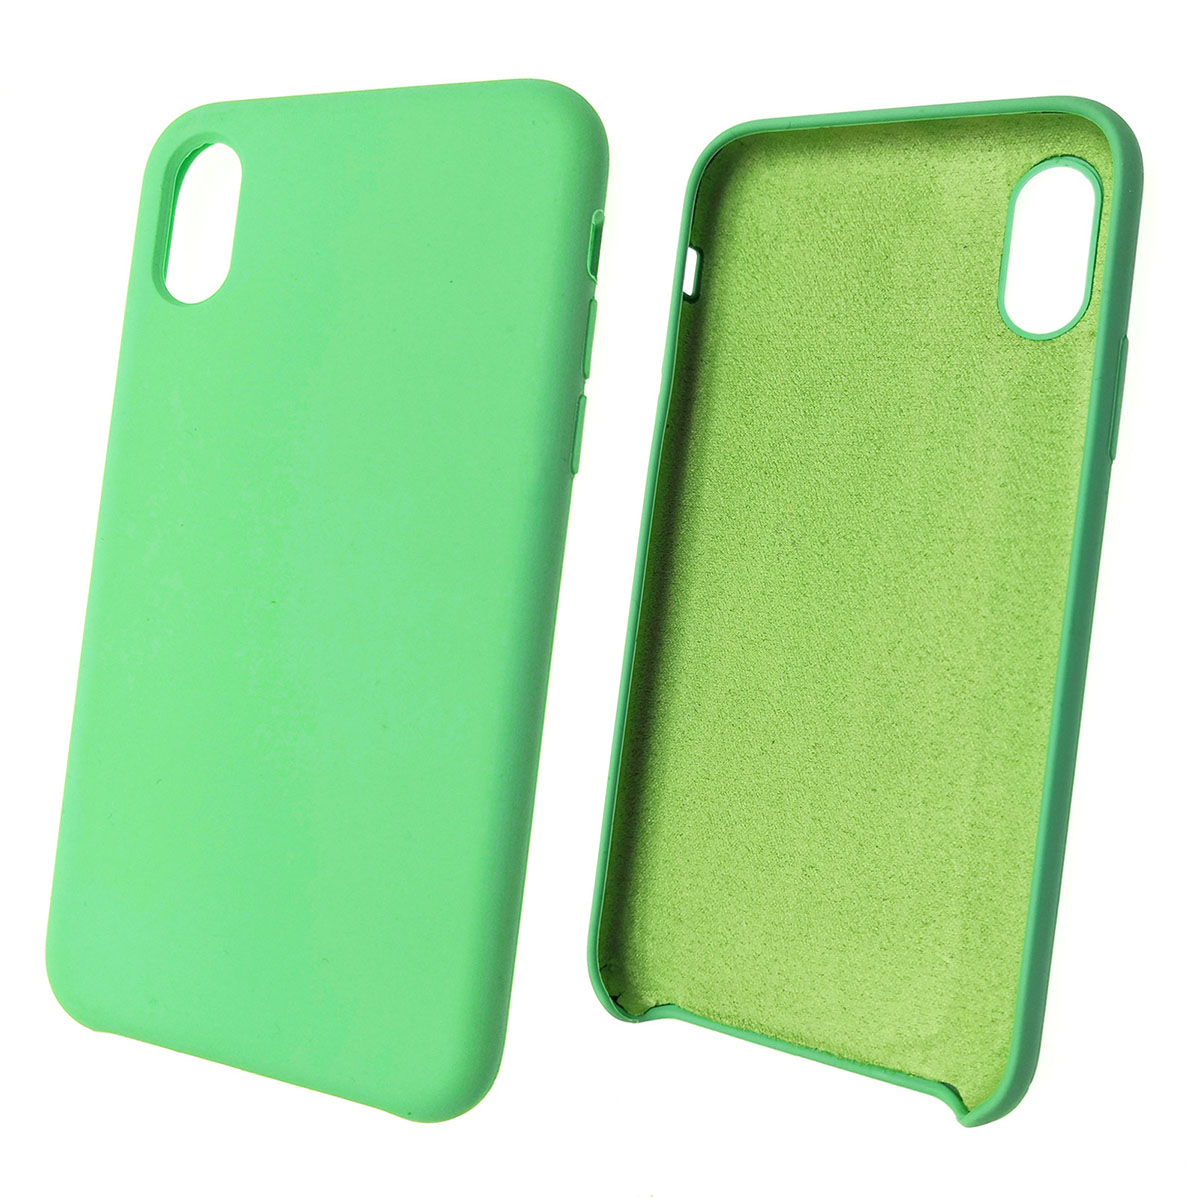 Чехол накладка Silicon Case для APPLE iPhone X, XS, силикон, бархат, цвет мятный.